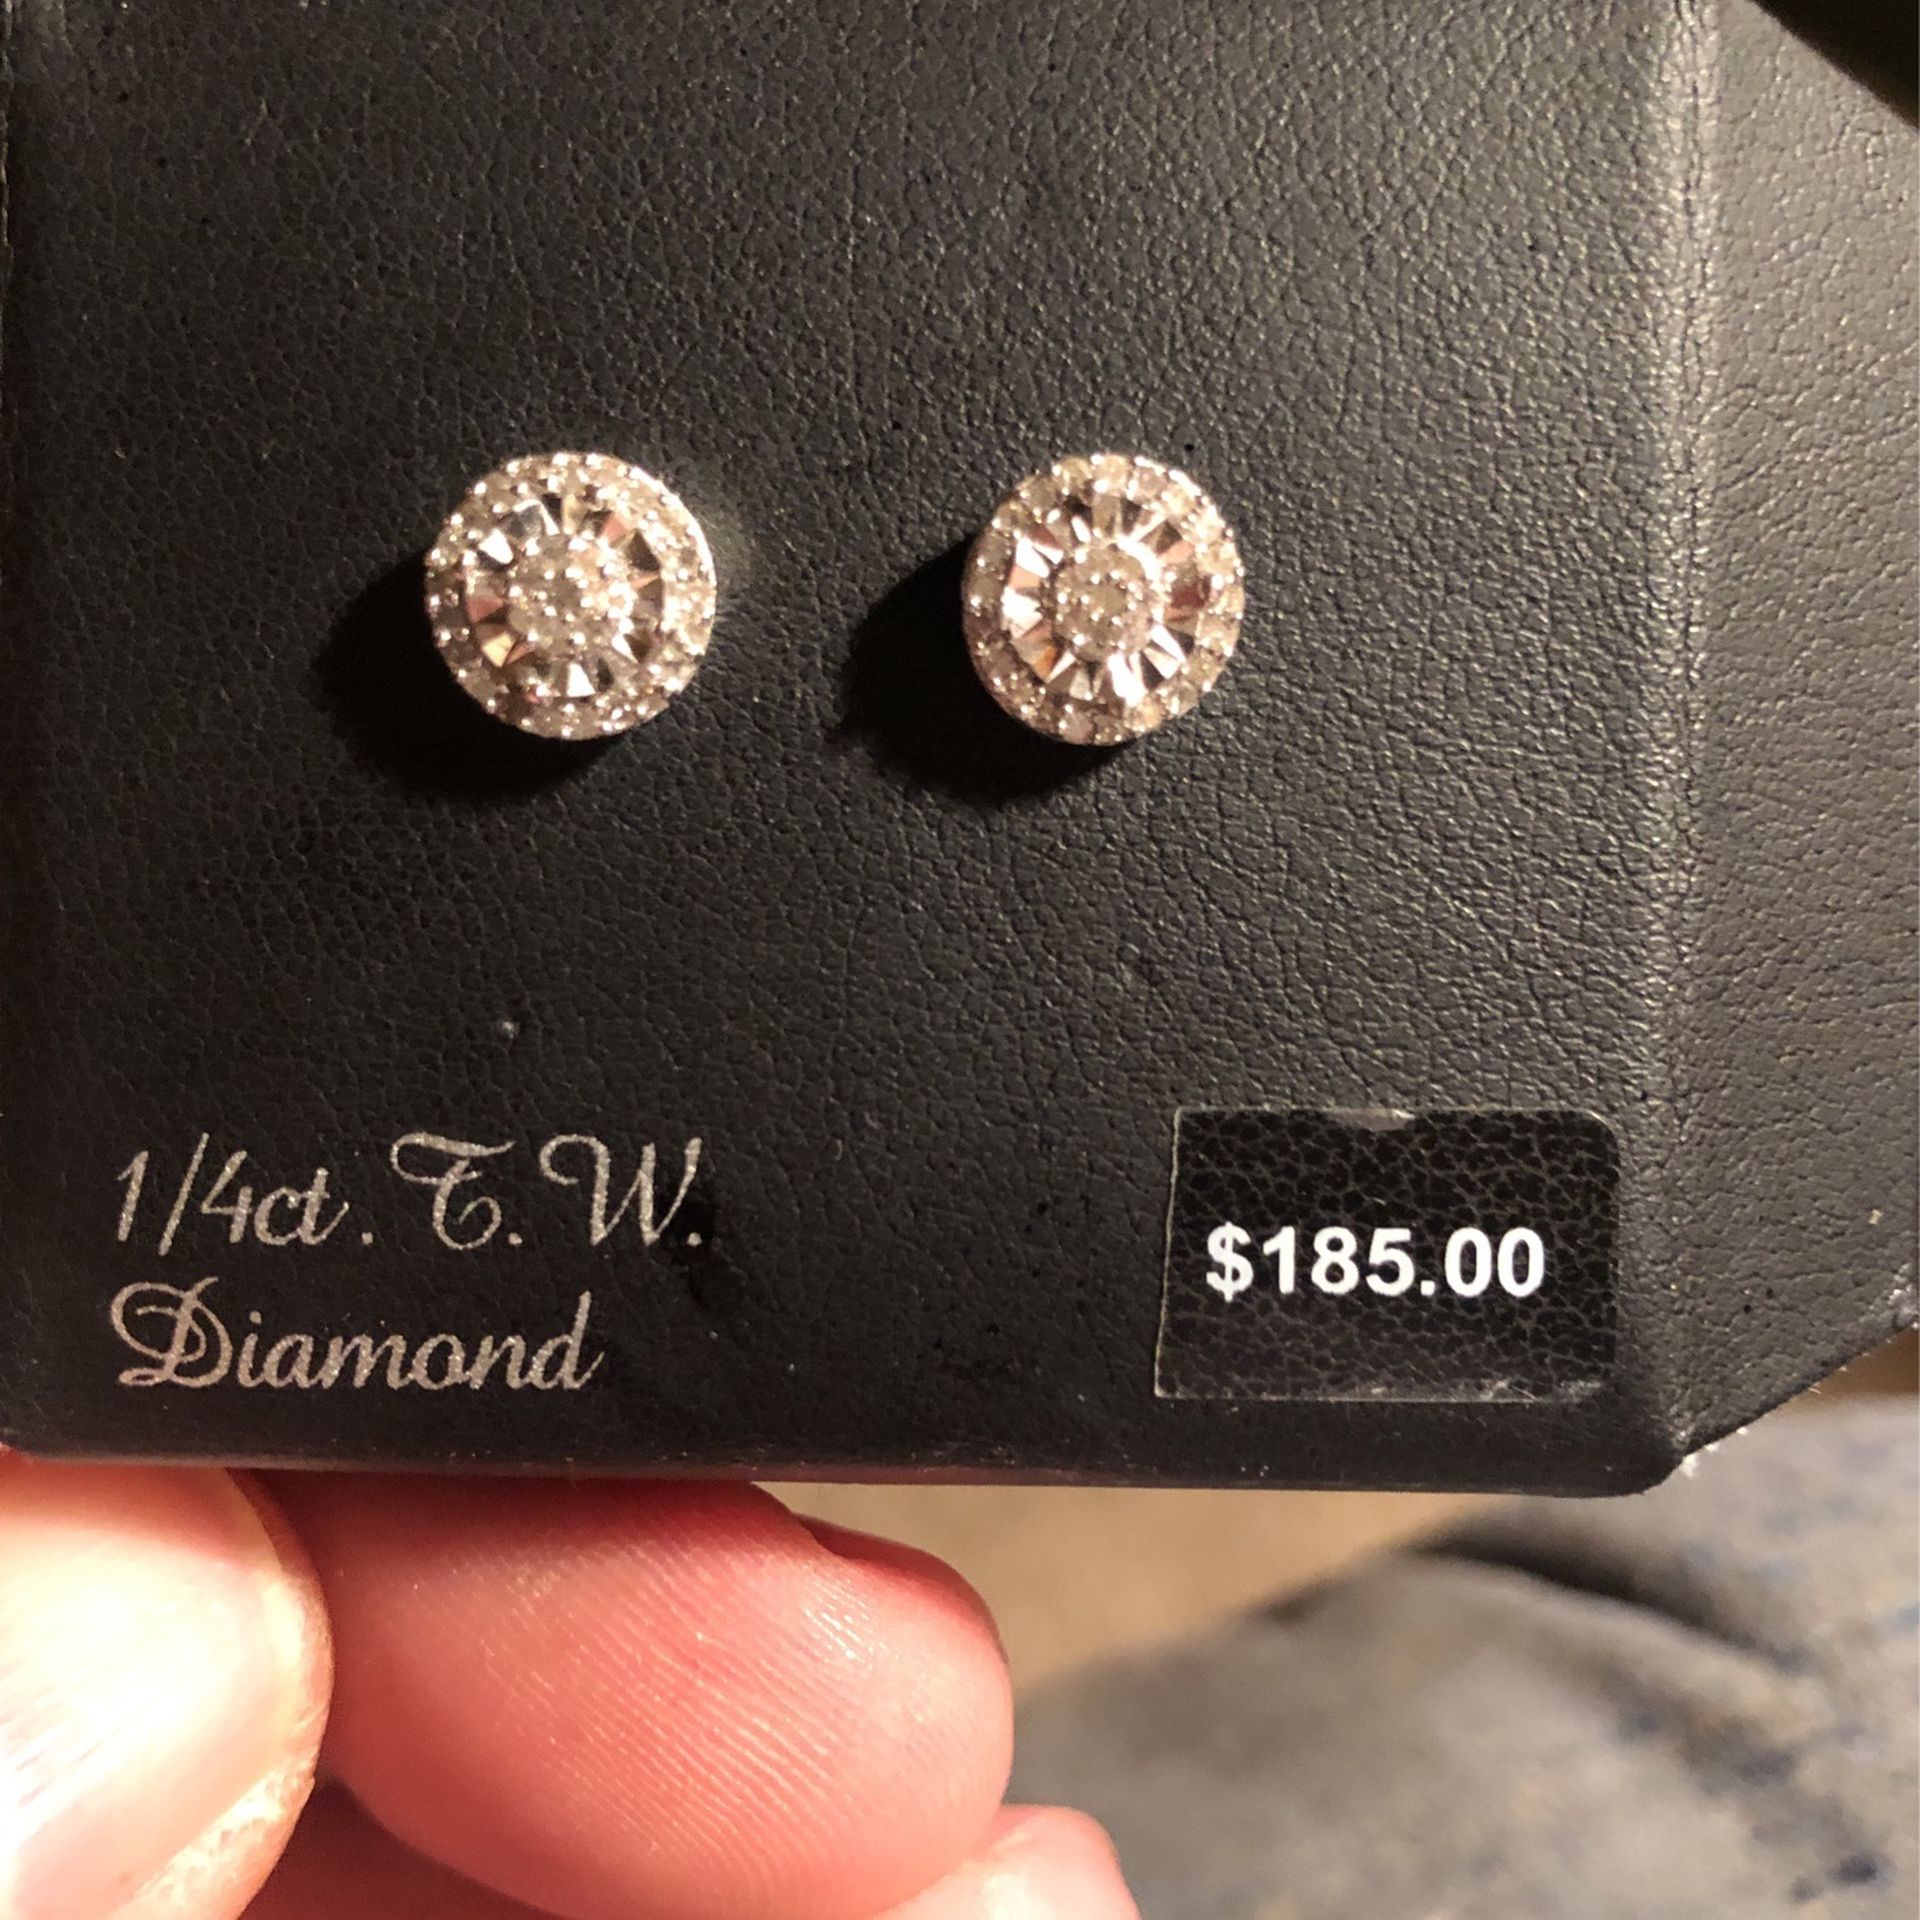 Brand New Never Worn Sterling Silver 1/4 Ct Diamond Earrings